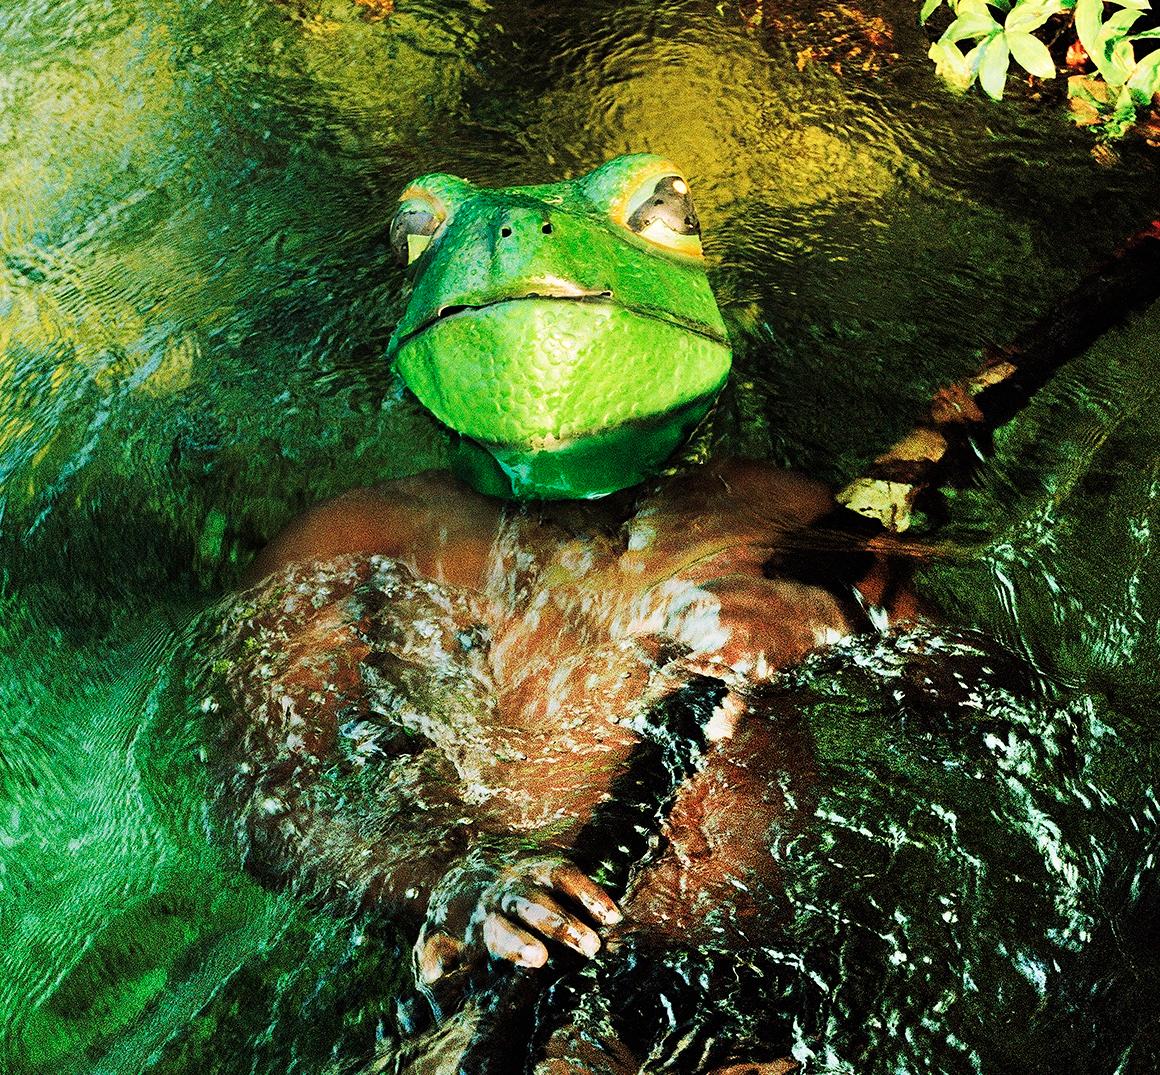 Congo Frog - 21st Century Landscape Portrait Animal Photography Edition - Black Landscape Photograph by Verena Prenner